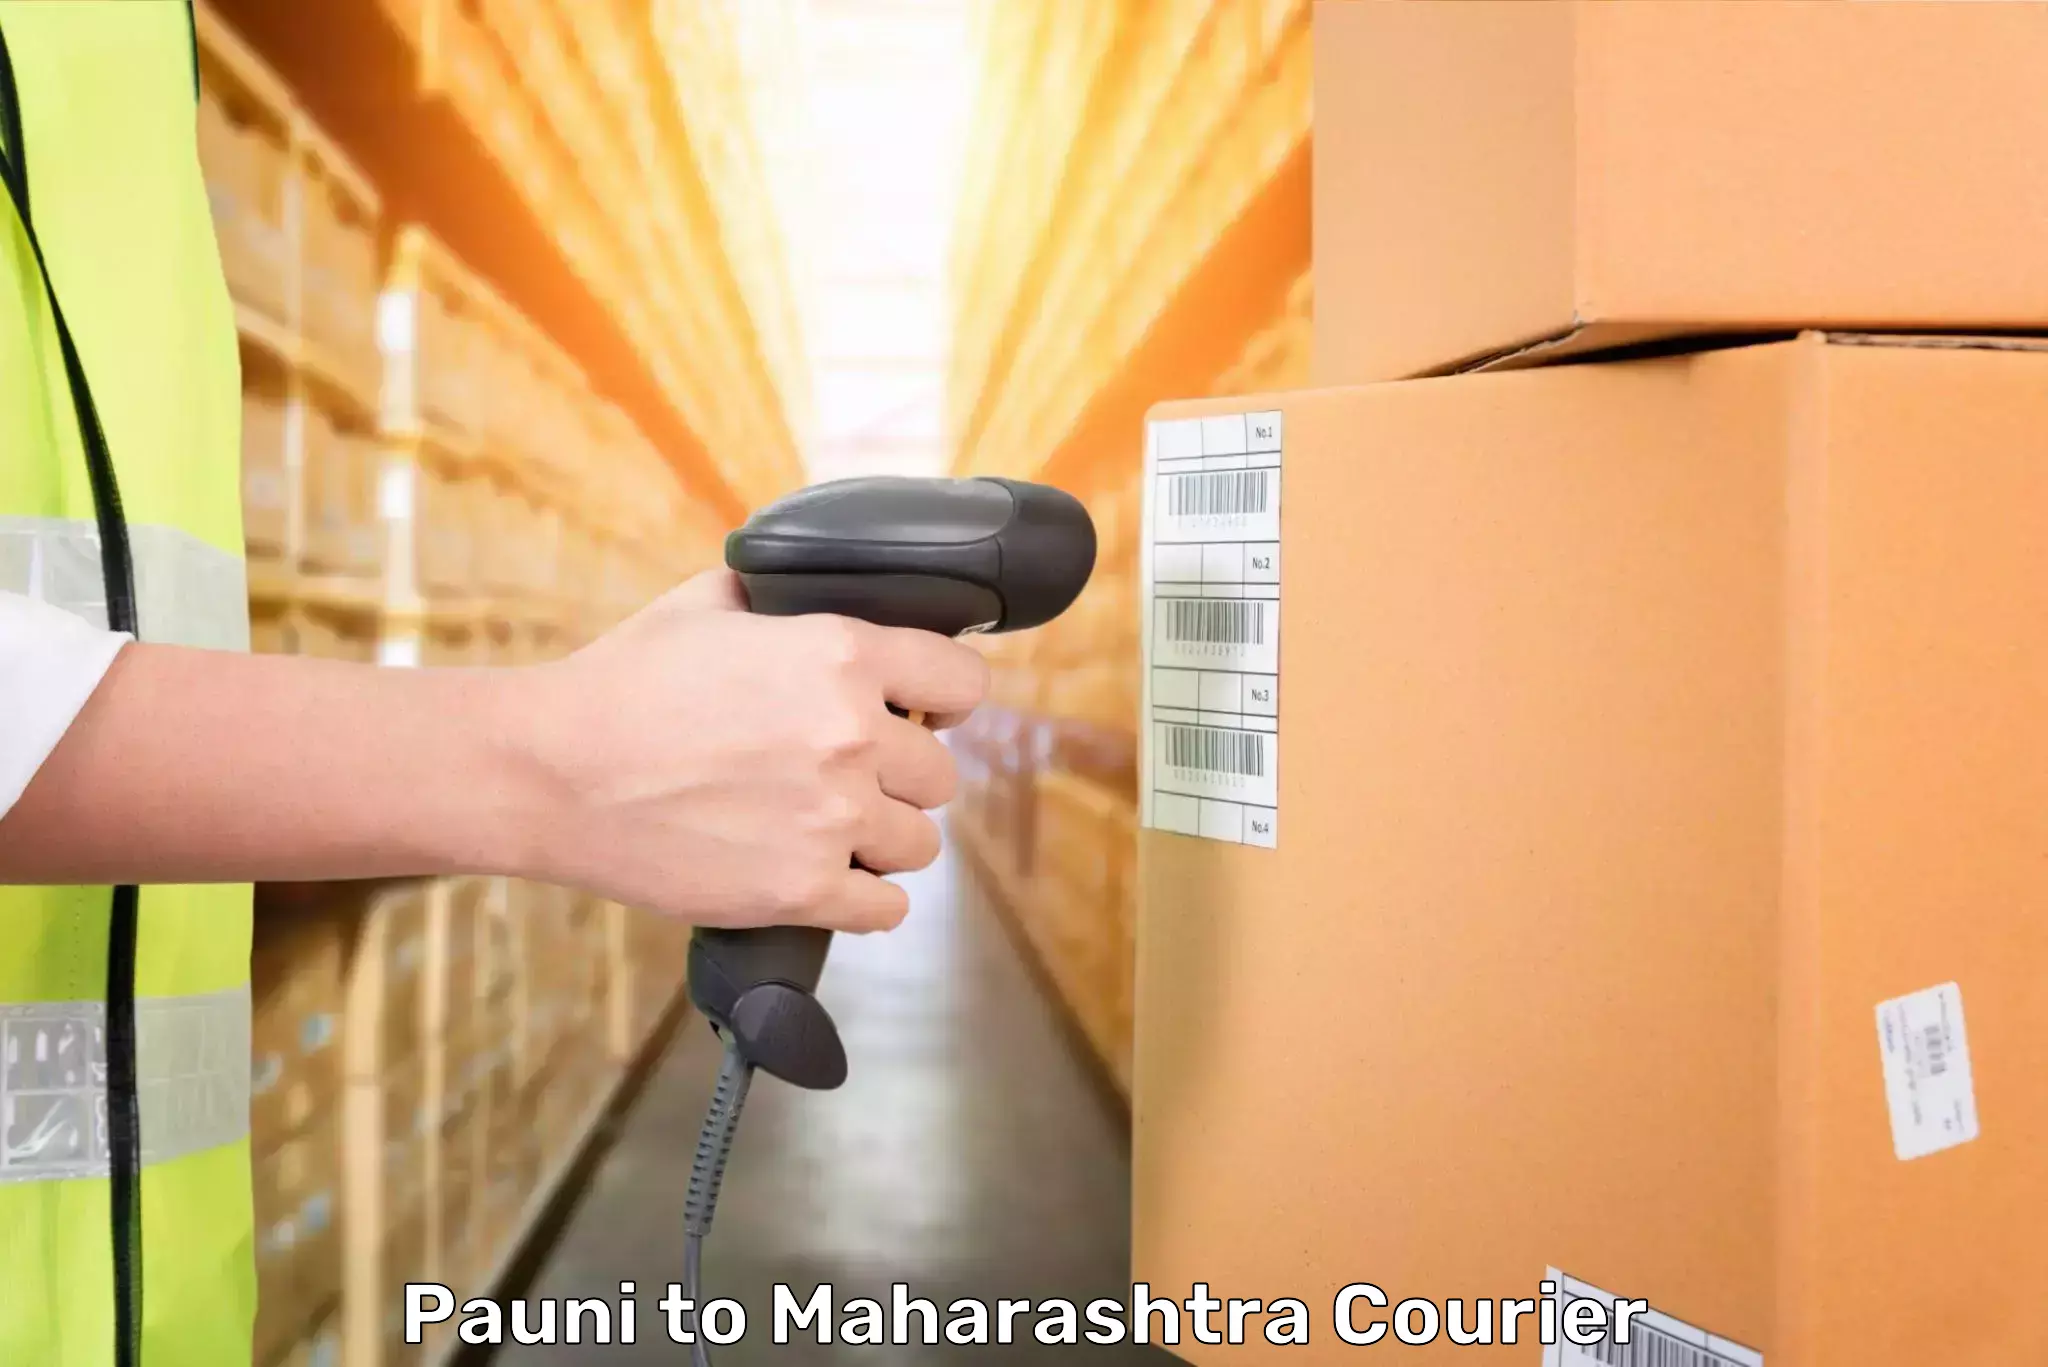 Personal effects shipping in Pauni to Maharashtra